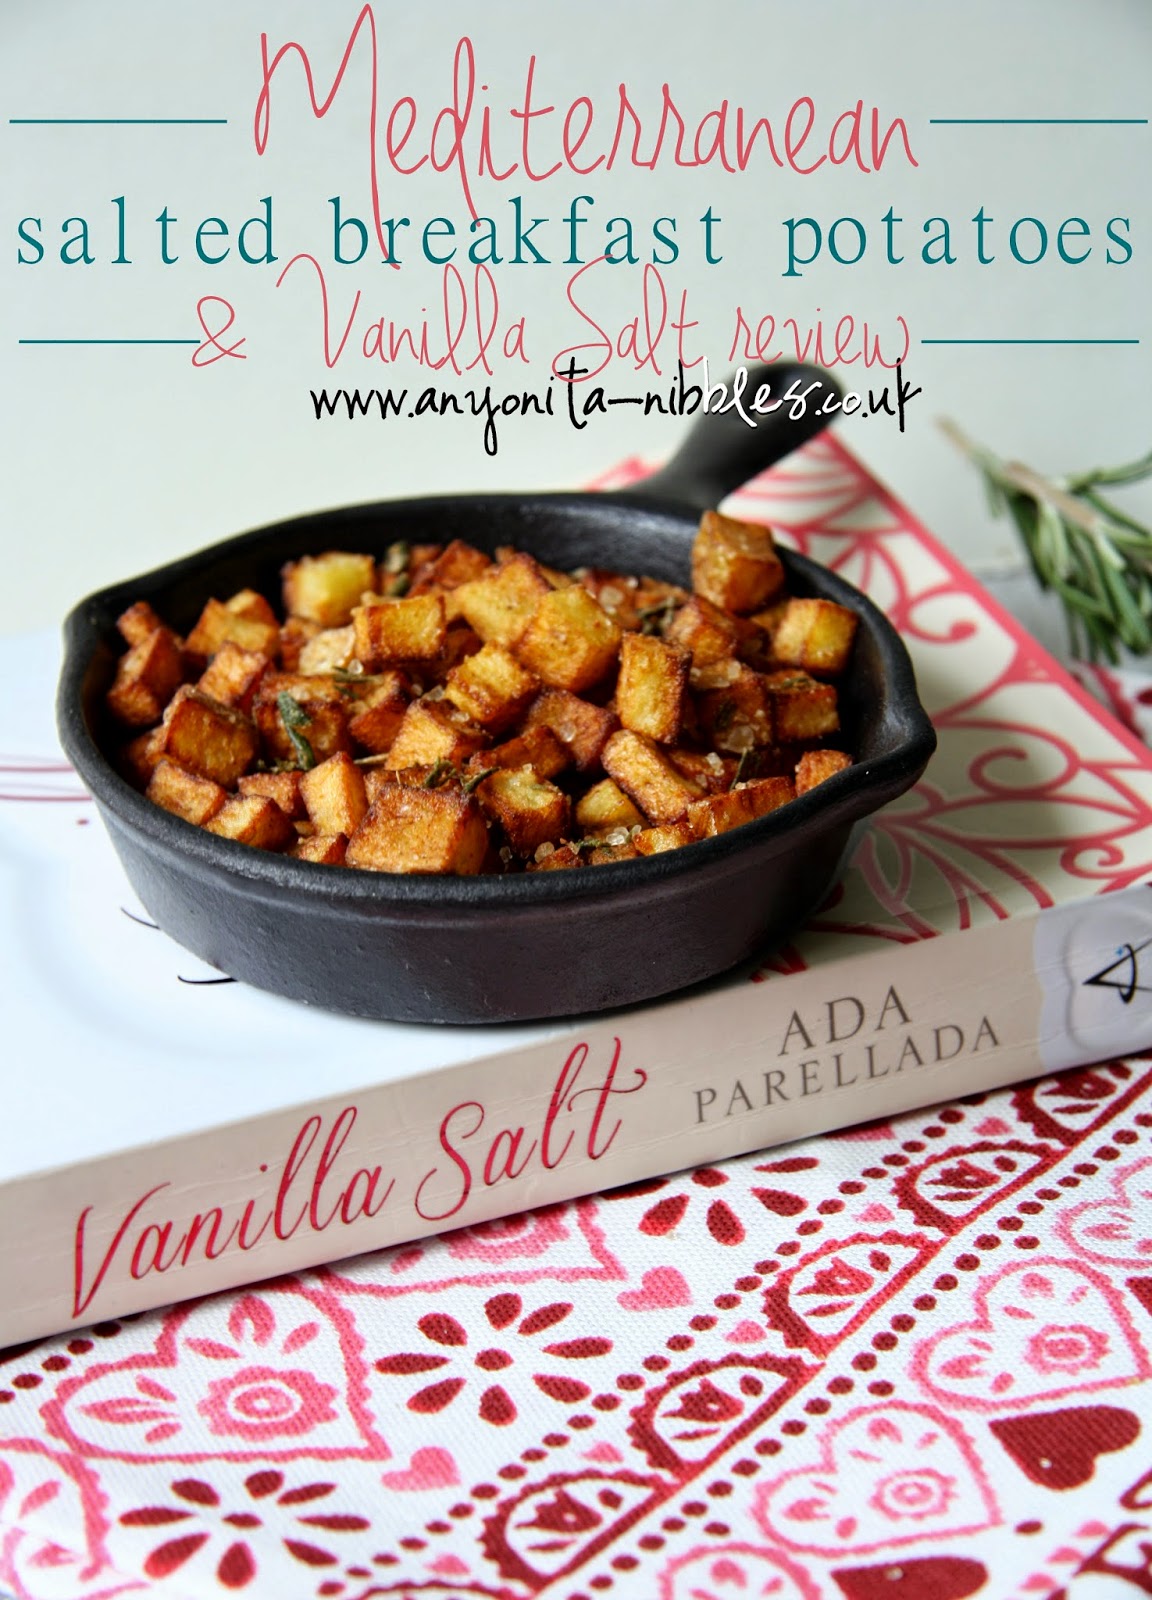 Mediterranean Salted Breakfast Potatoes inspired by the book Vanilla Salt from www.anyonita-nibbles.co.uk #glutenfree #vegan #vegetarian